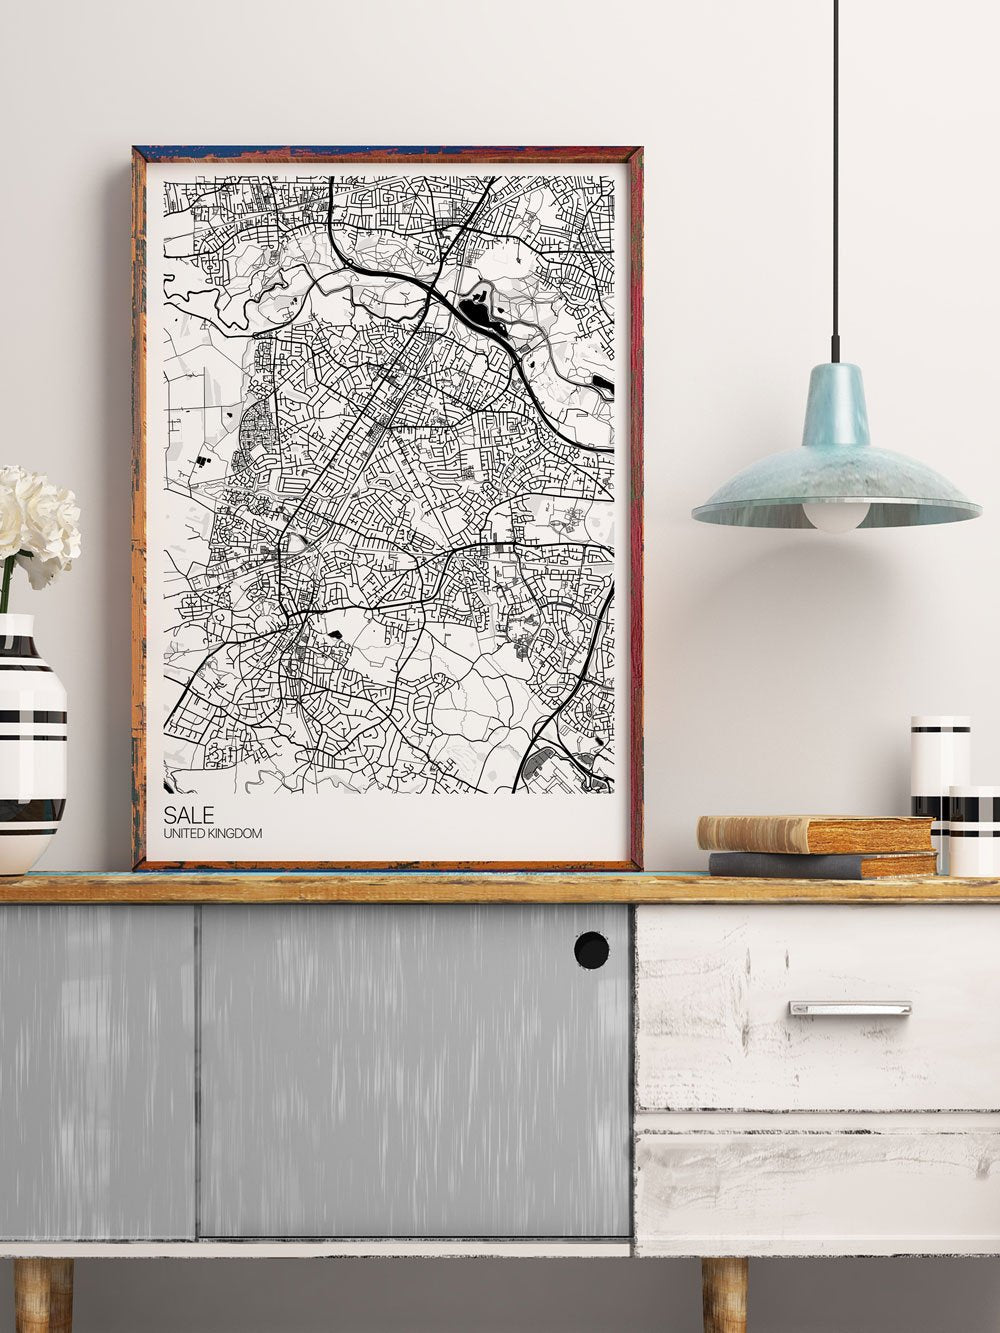 Sale Trafford Map Print in a kitchen